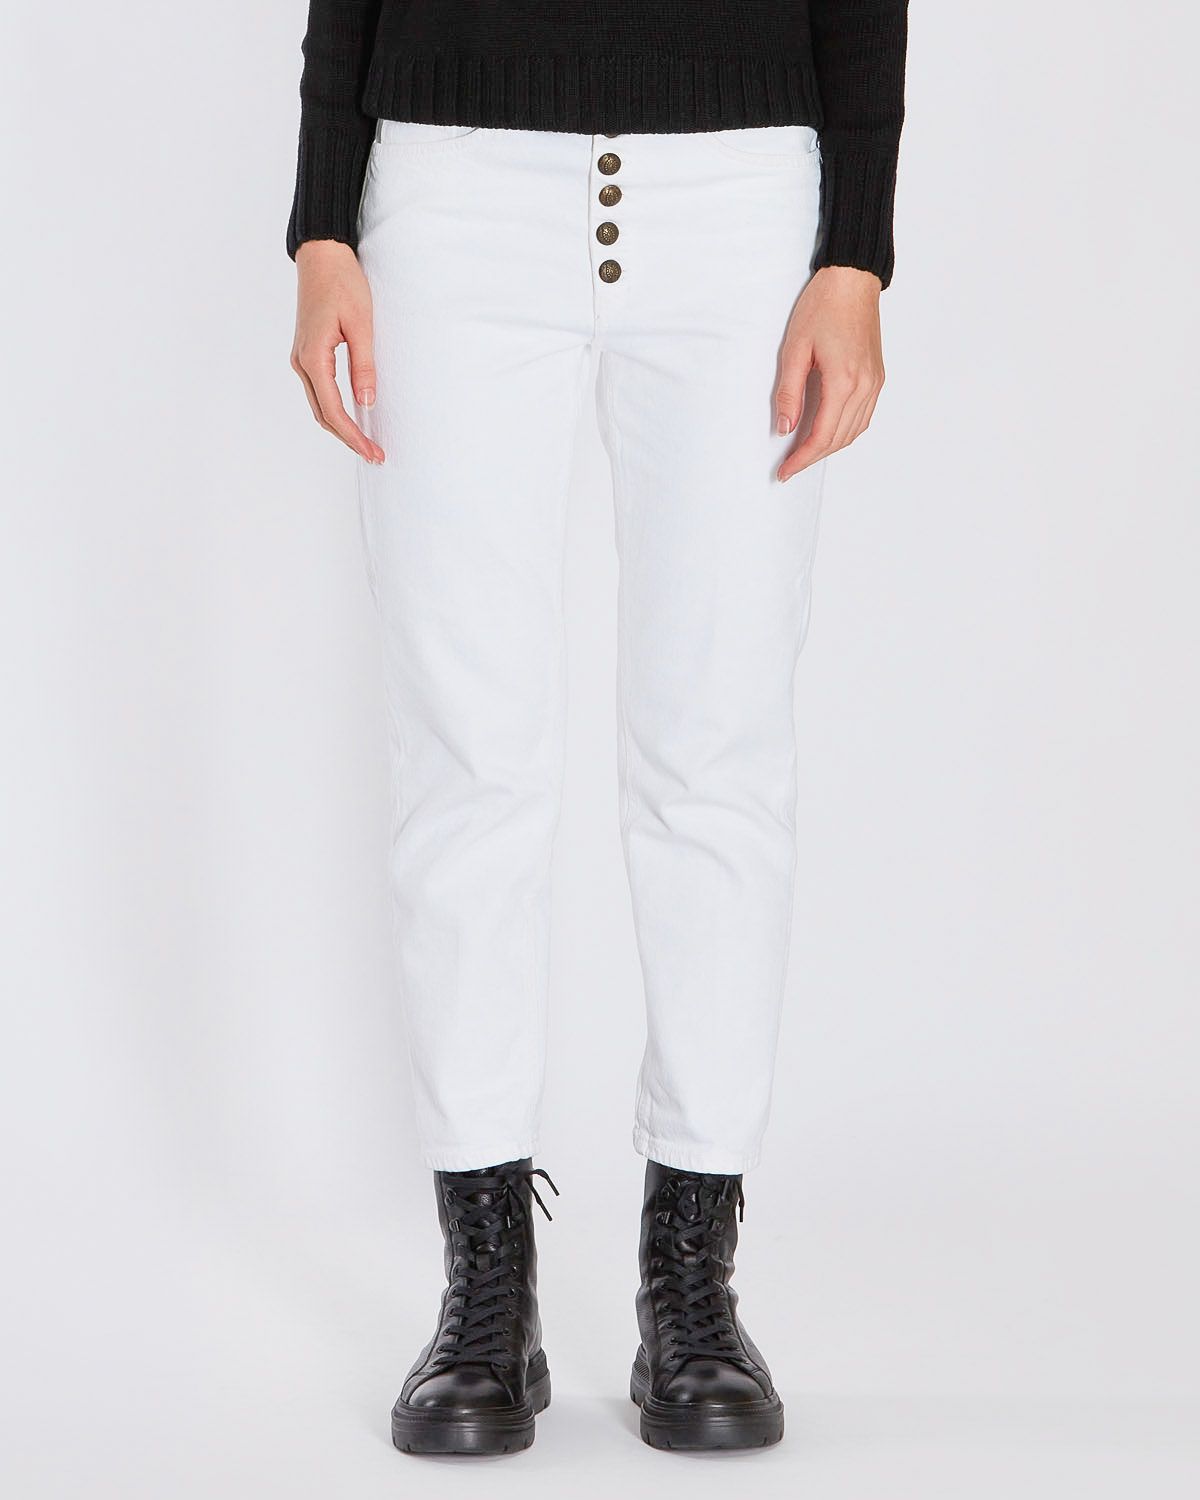 Pantalone Koons bianco